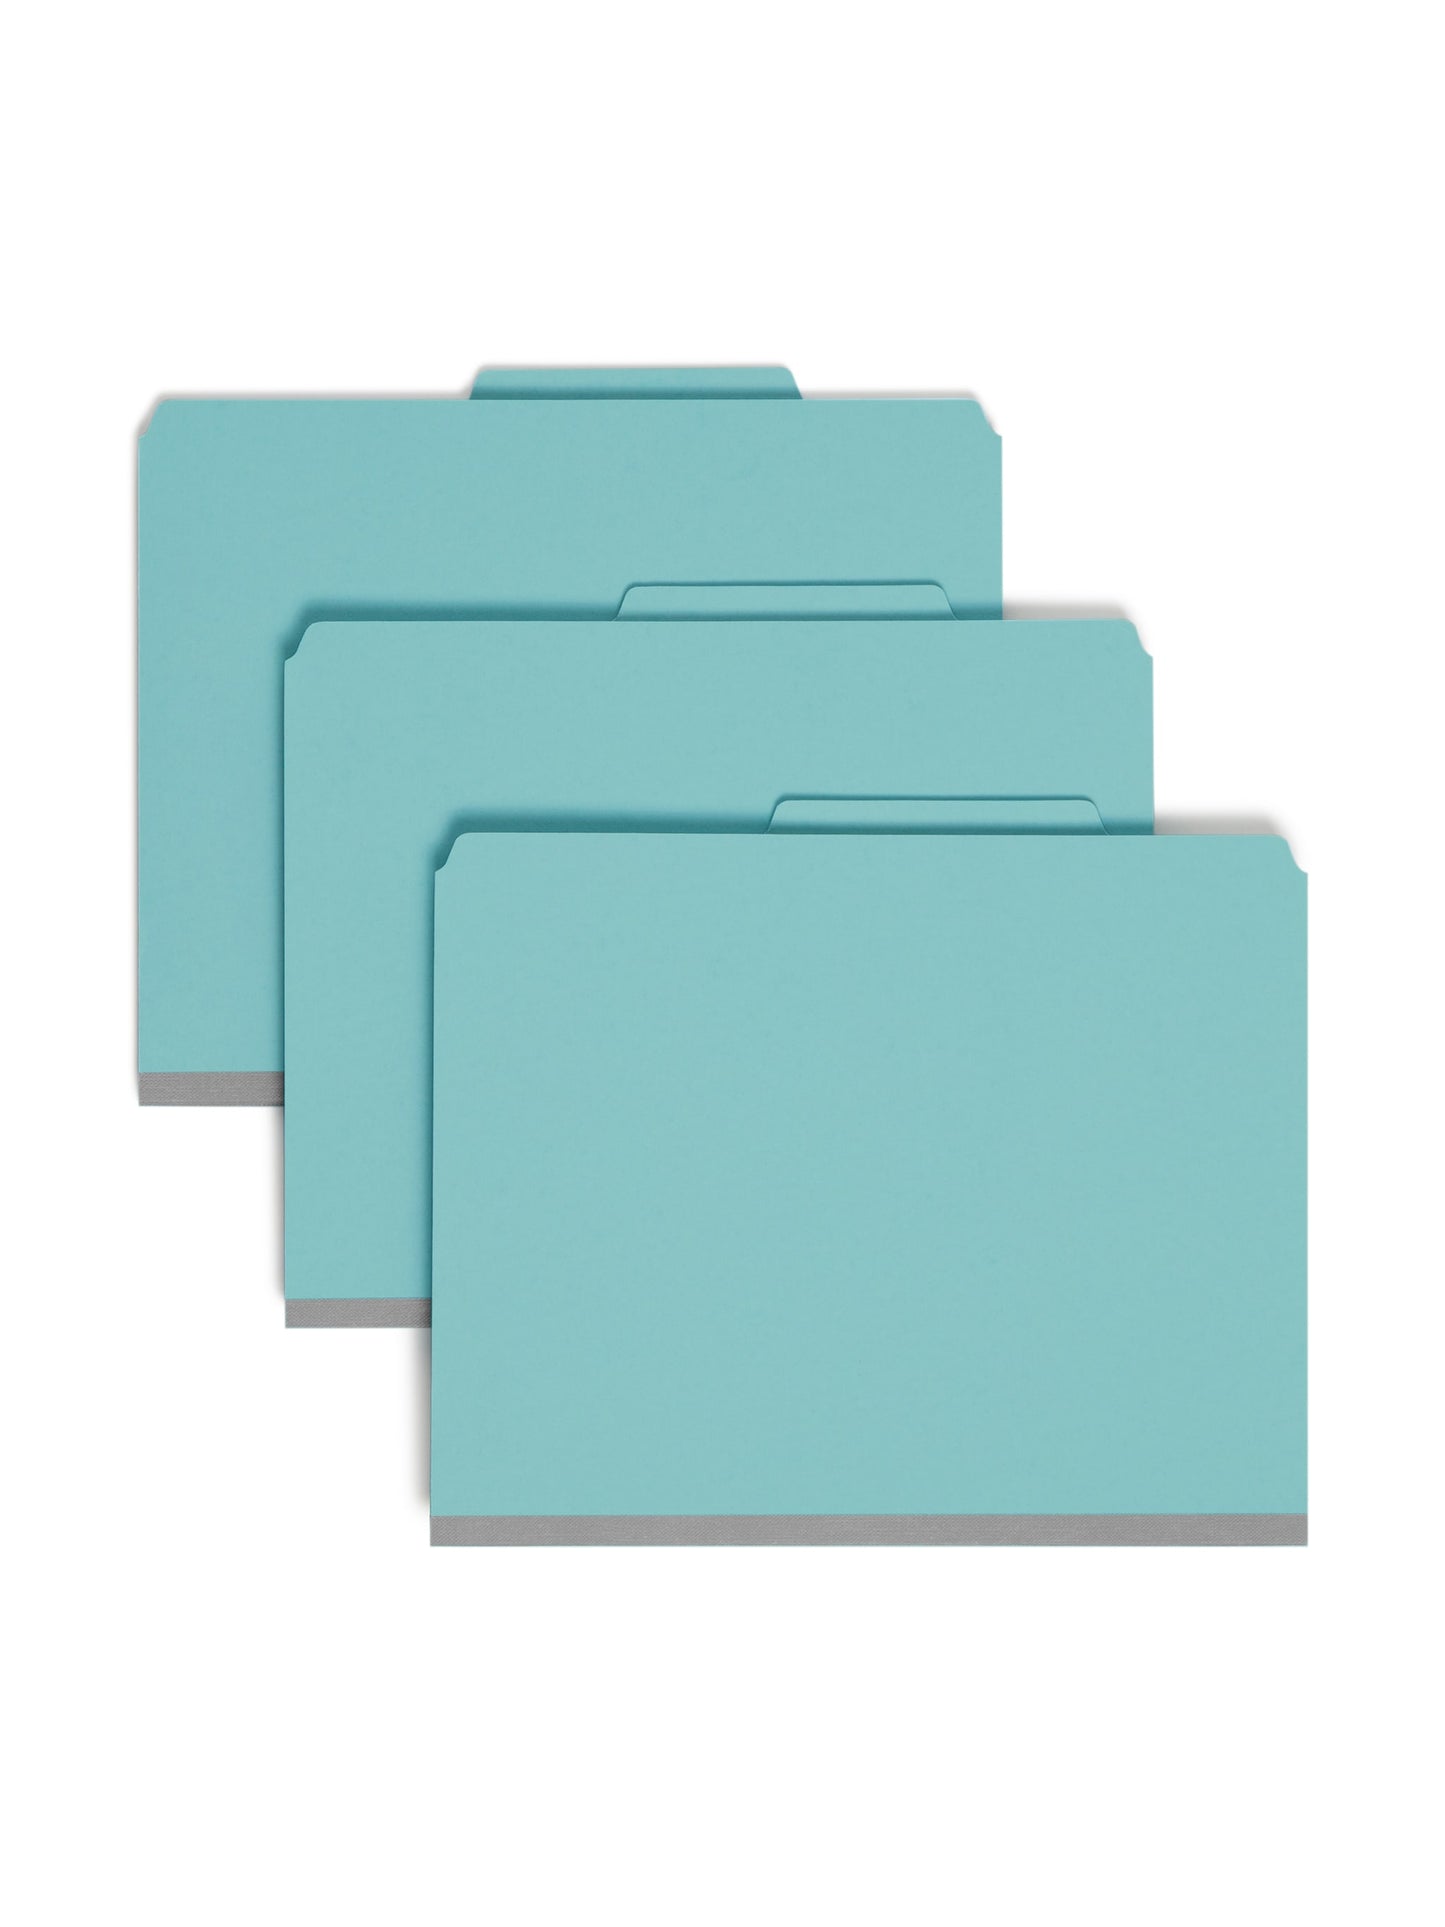 SafeSHIELD® Pressboard Classification File Folders with Pocket Dividers, Blue Color, Letter Size, 